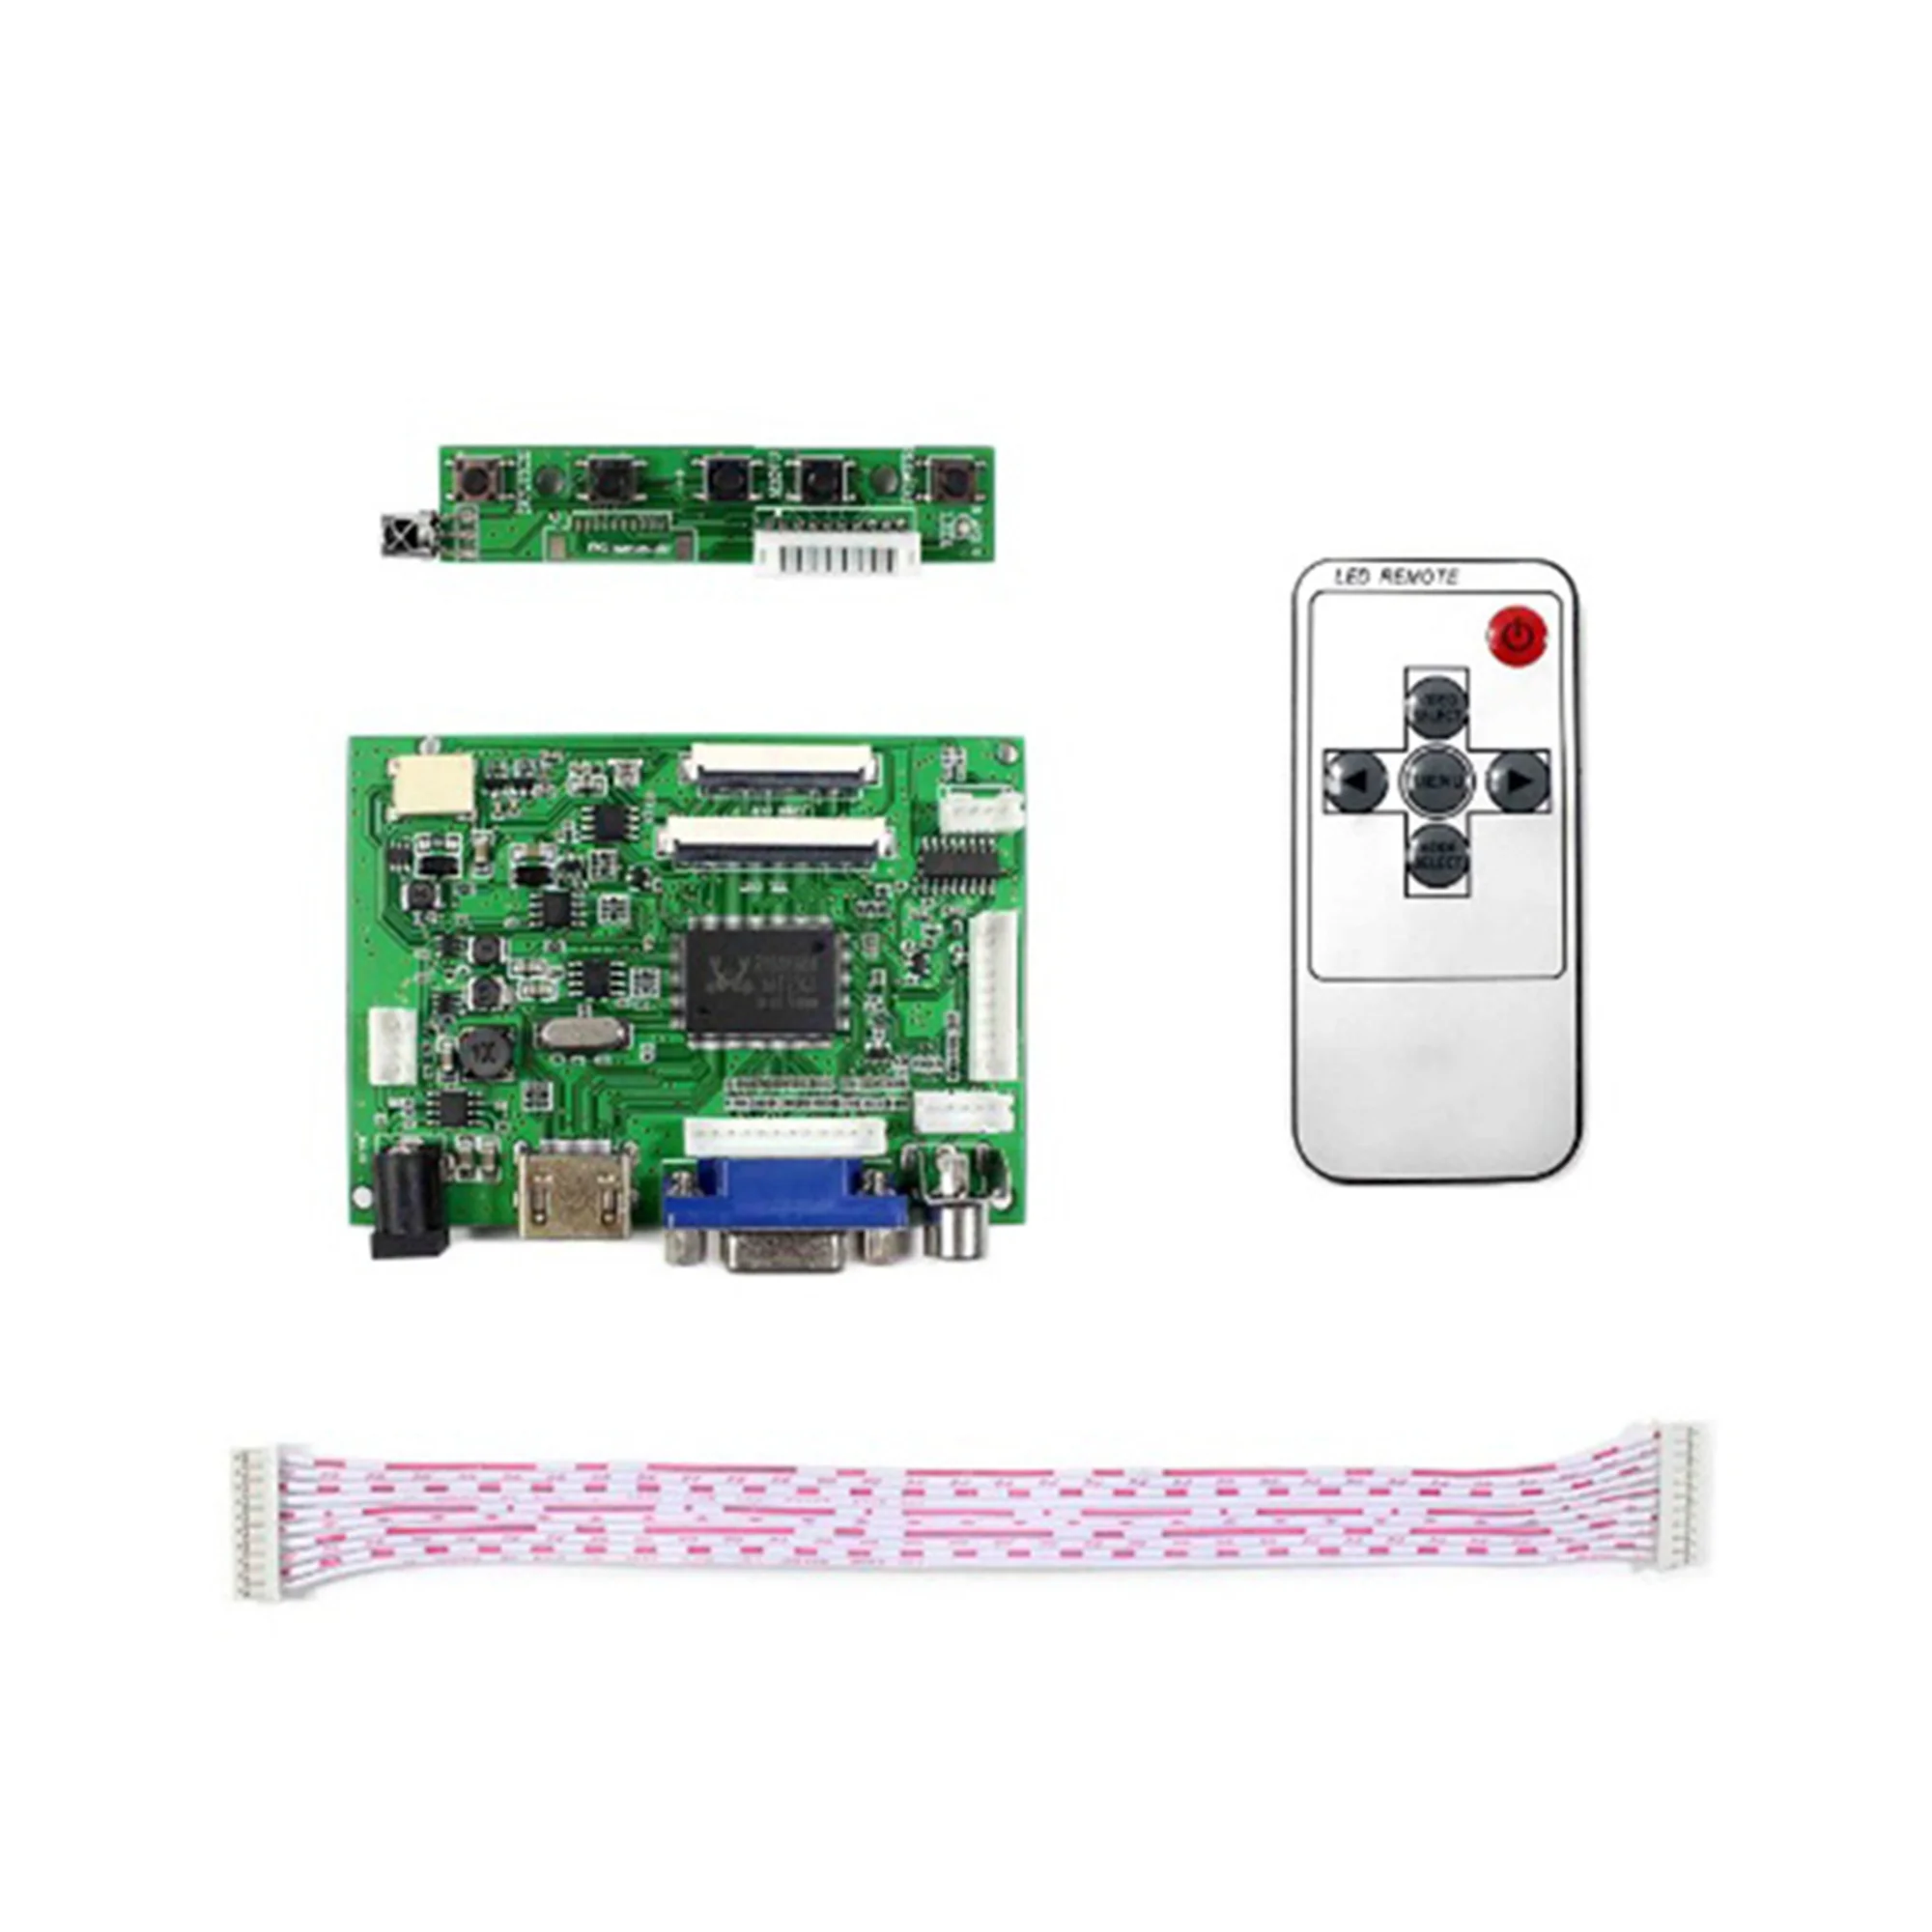 

HD MI VGA 2AV Controller Board VS-TY2662-V1 Work For 5 Inch 800x480 LCD panel AT050TN43